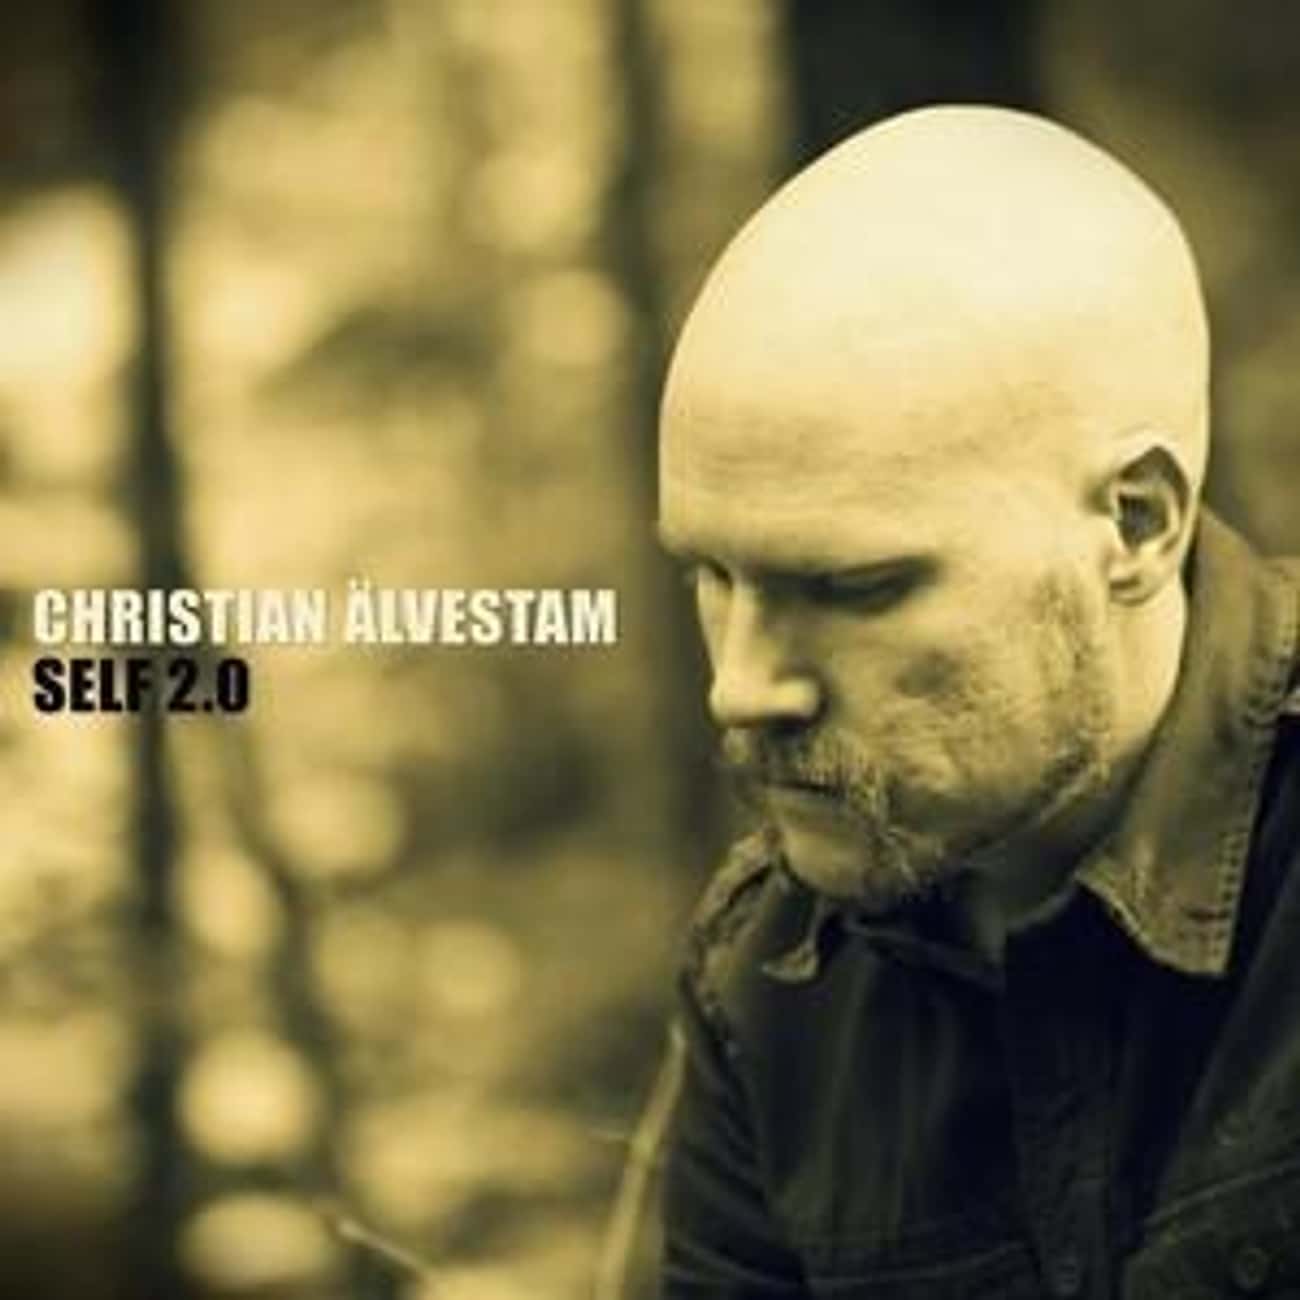 Christian Älvestam